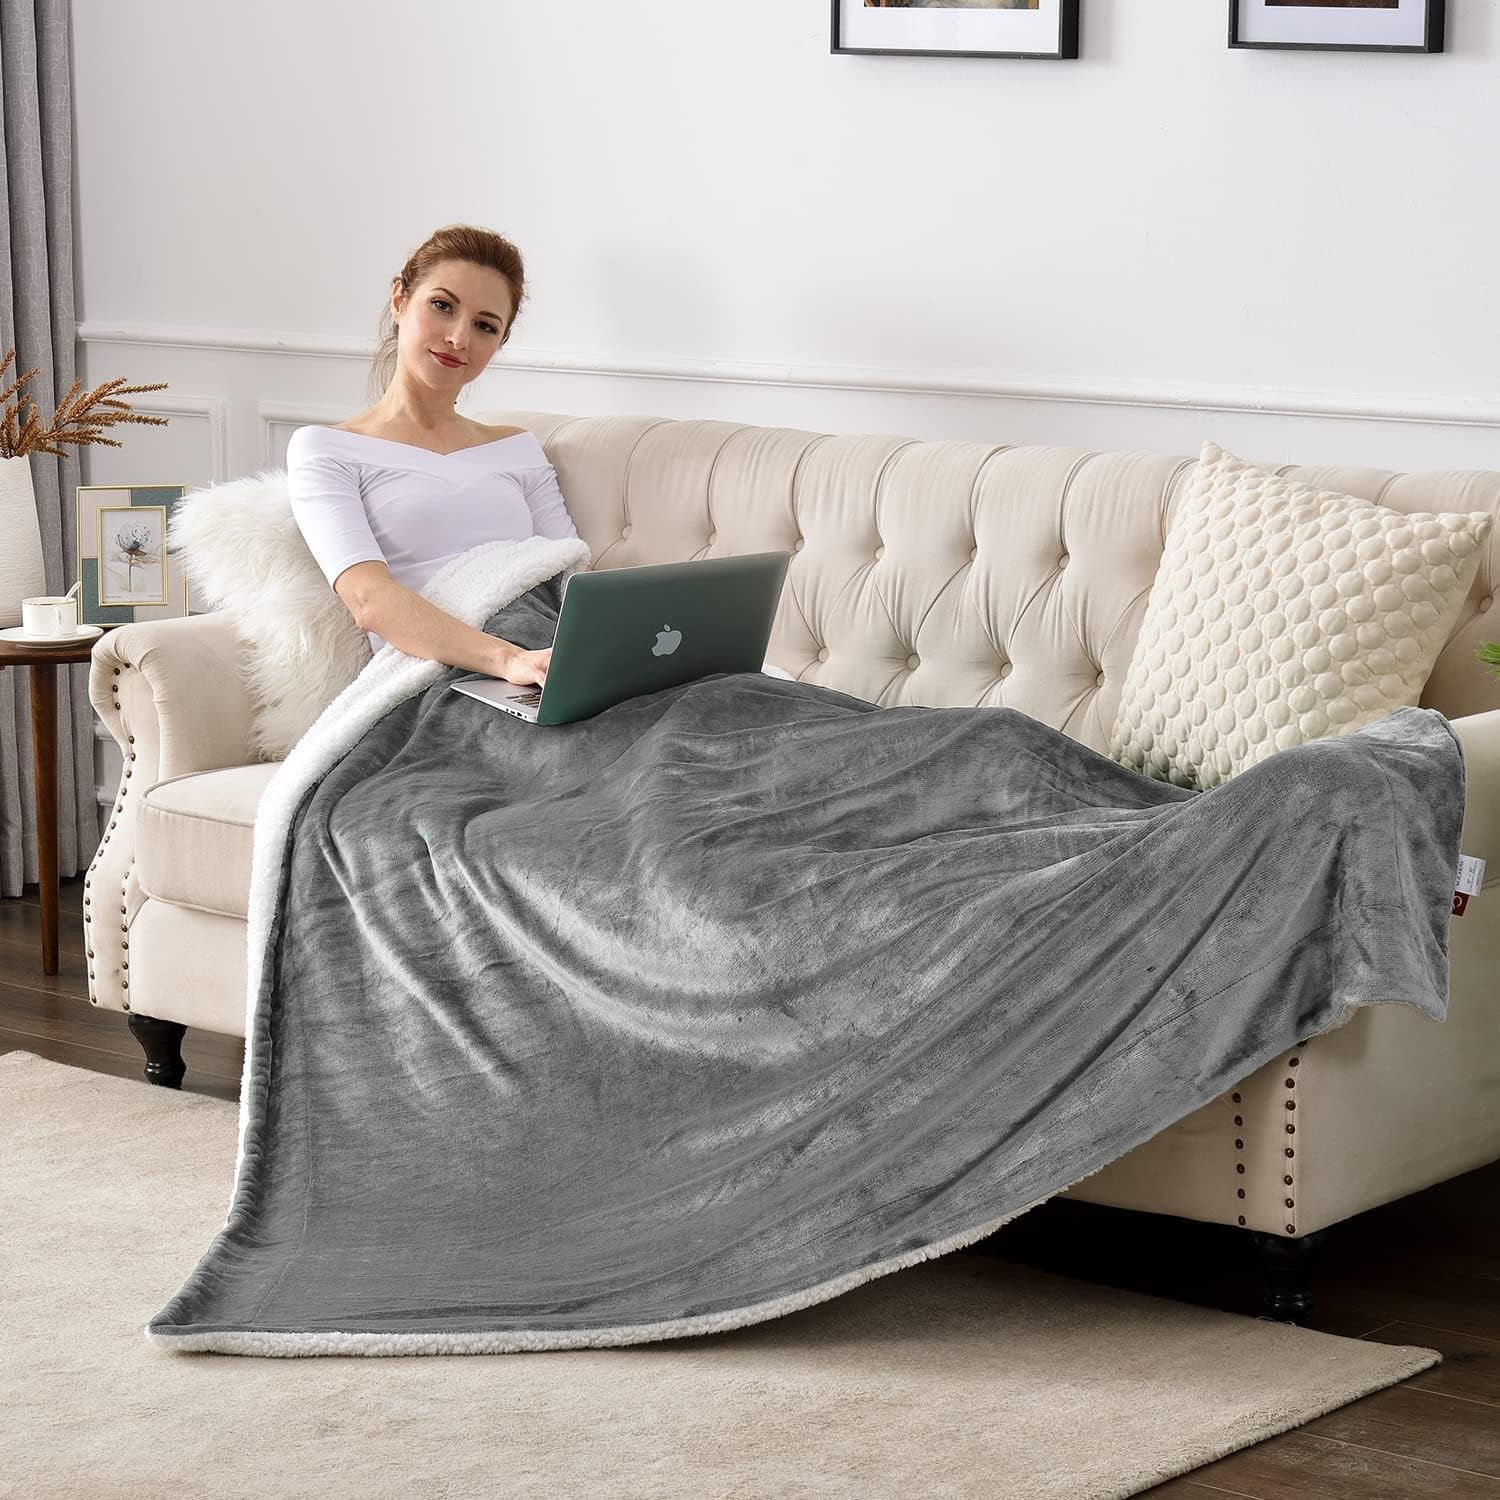  Fleece Blanket